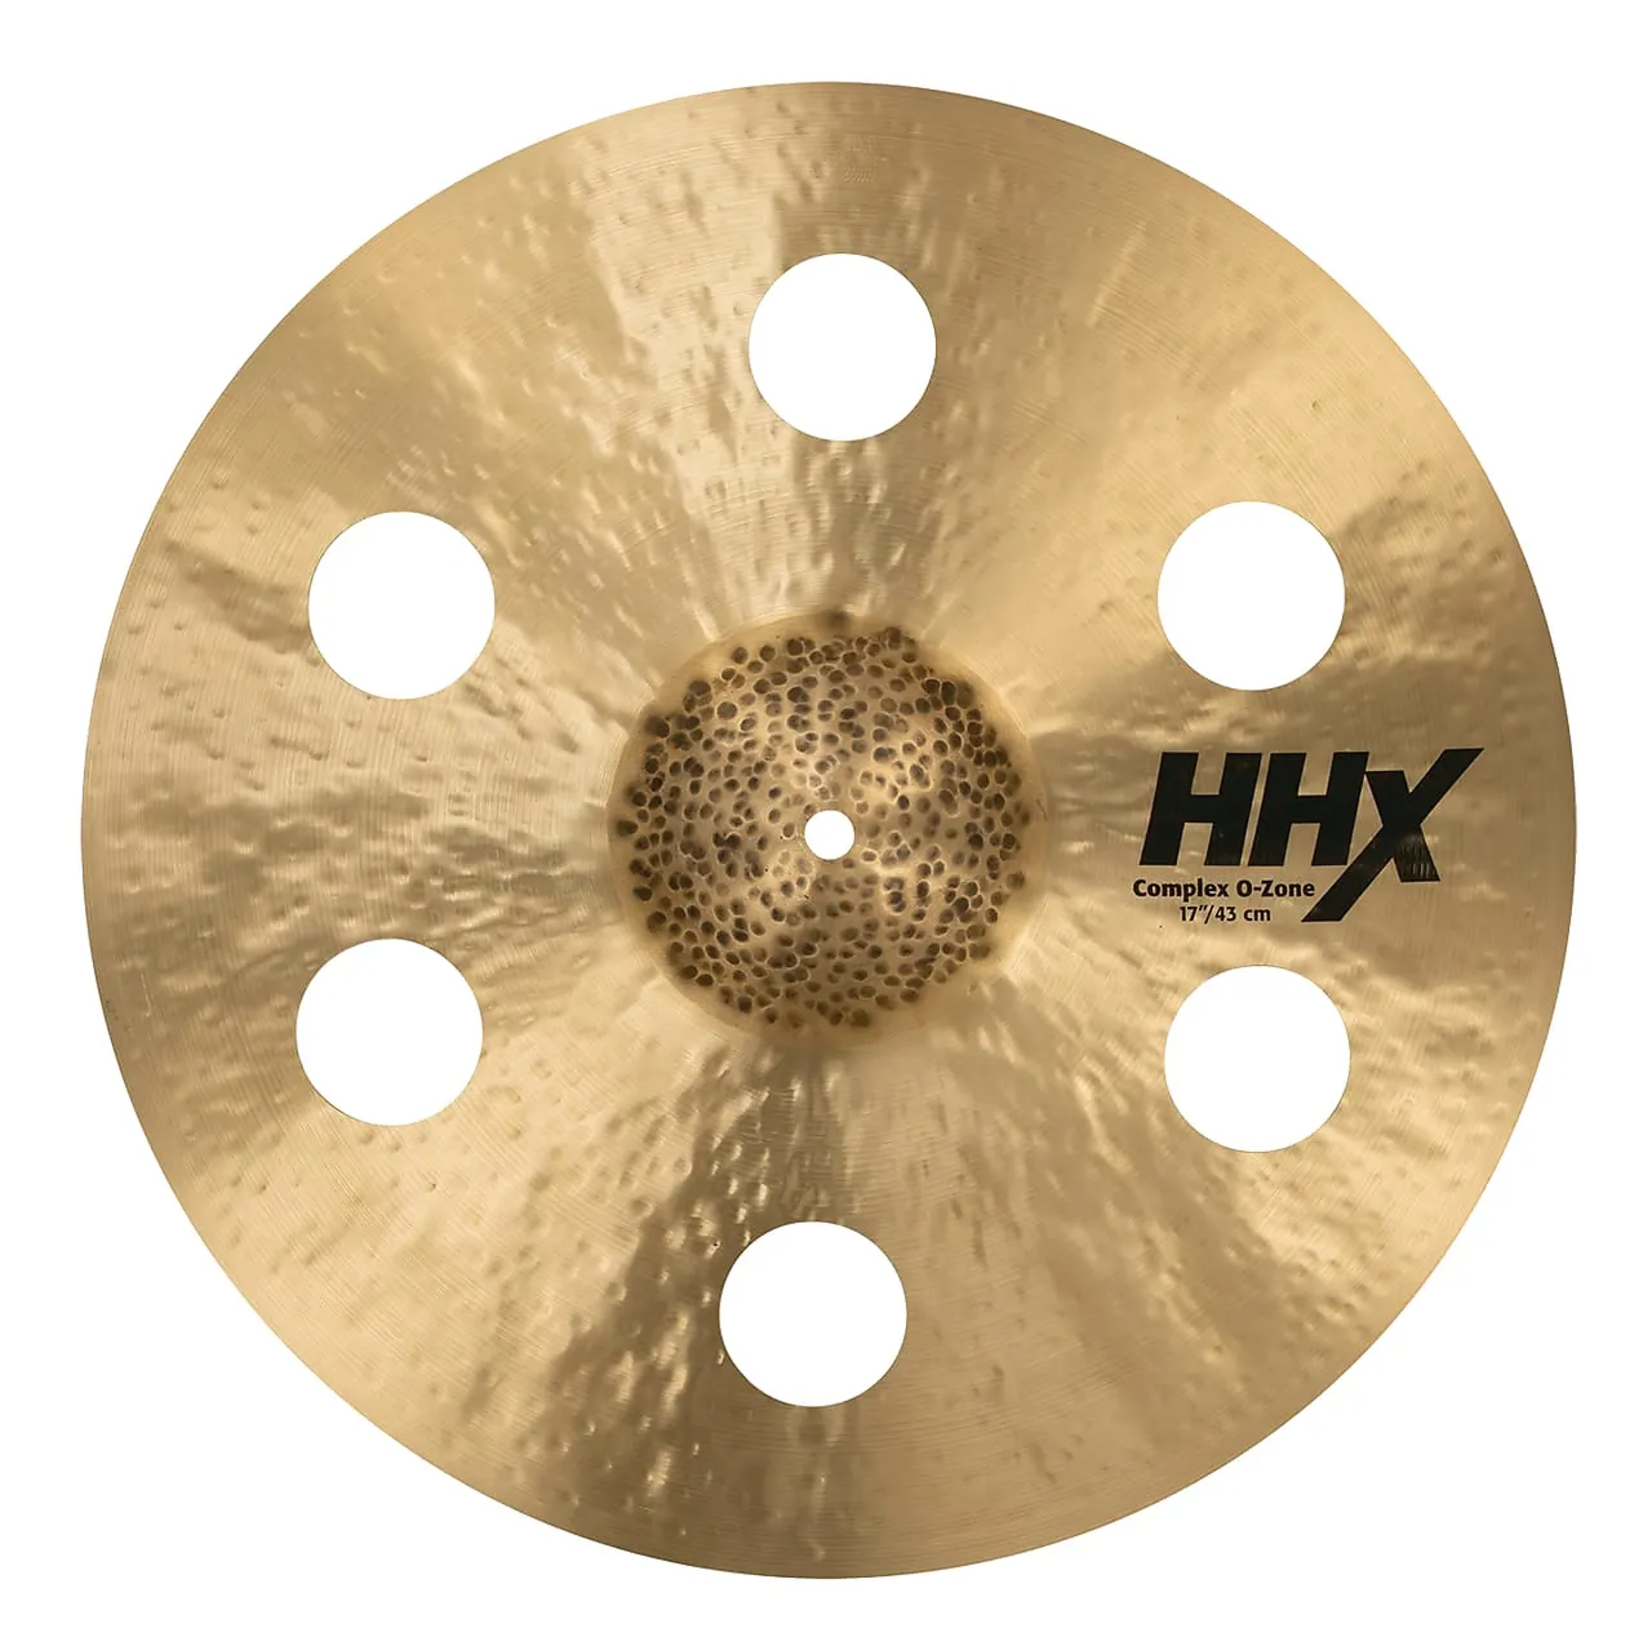 Sabian Sabian HHX 17" Complex Ozone Crash Cymbal